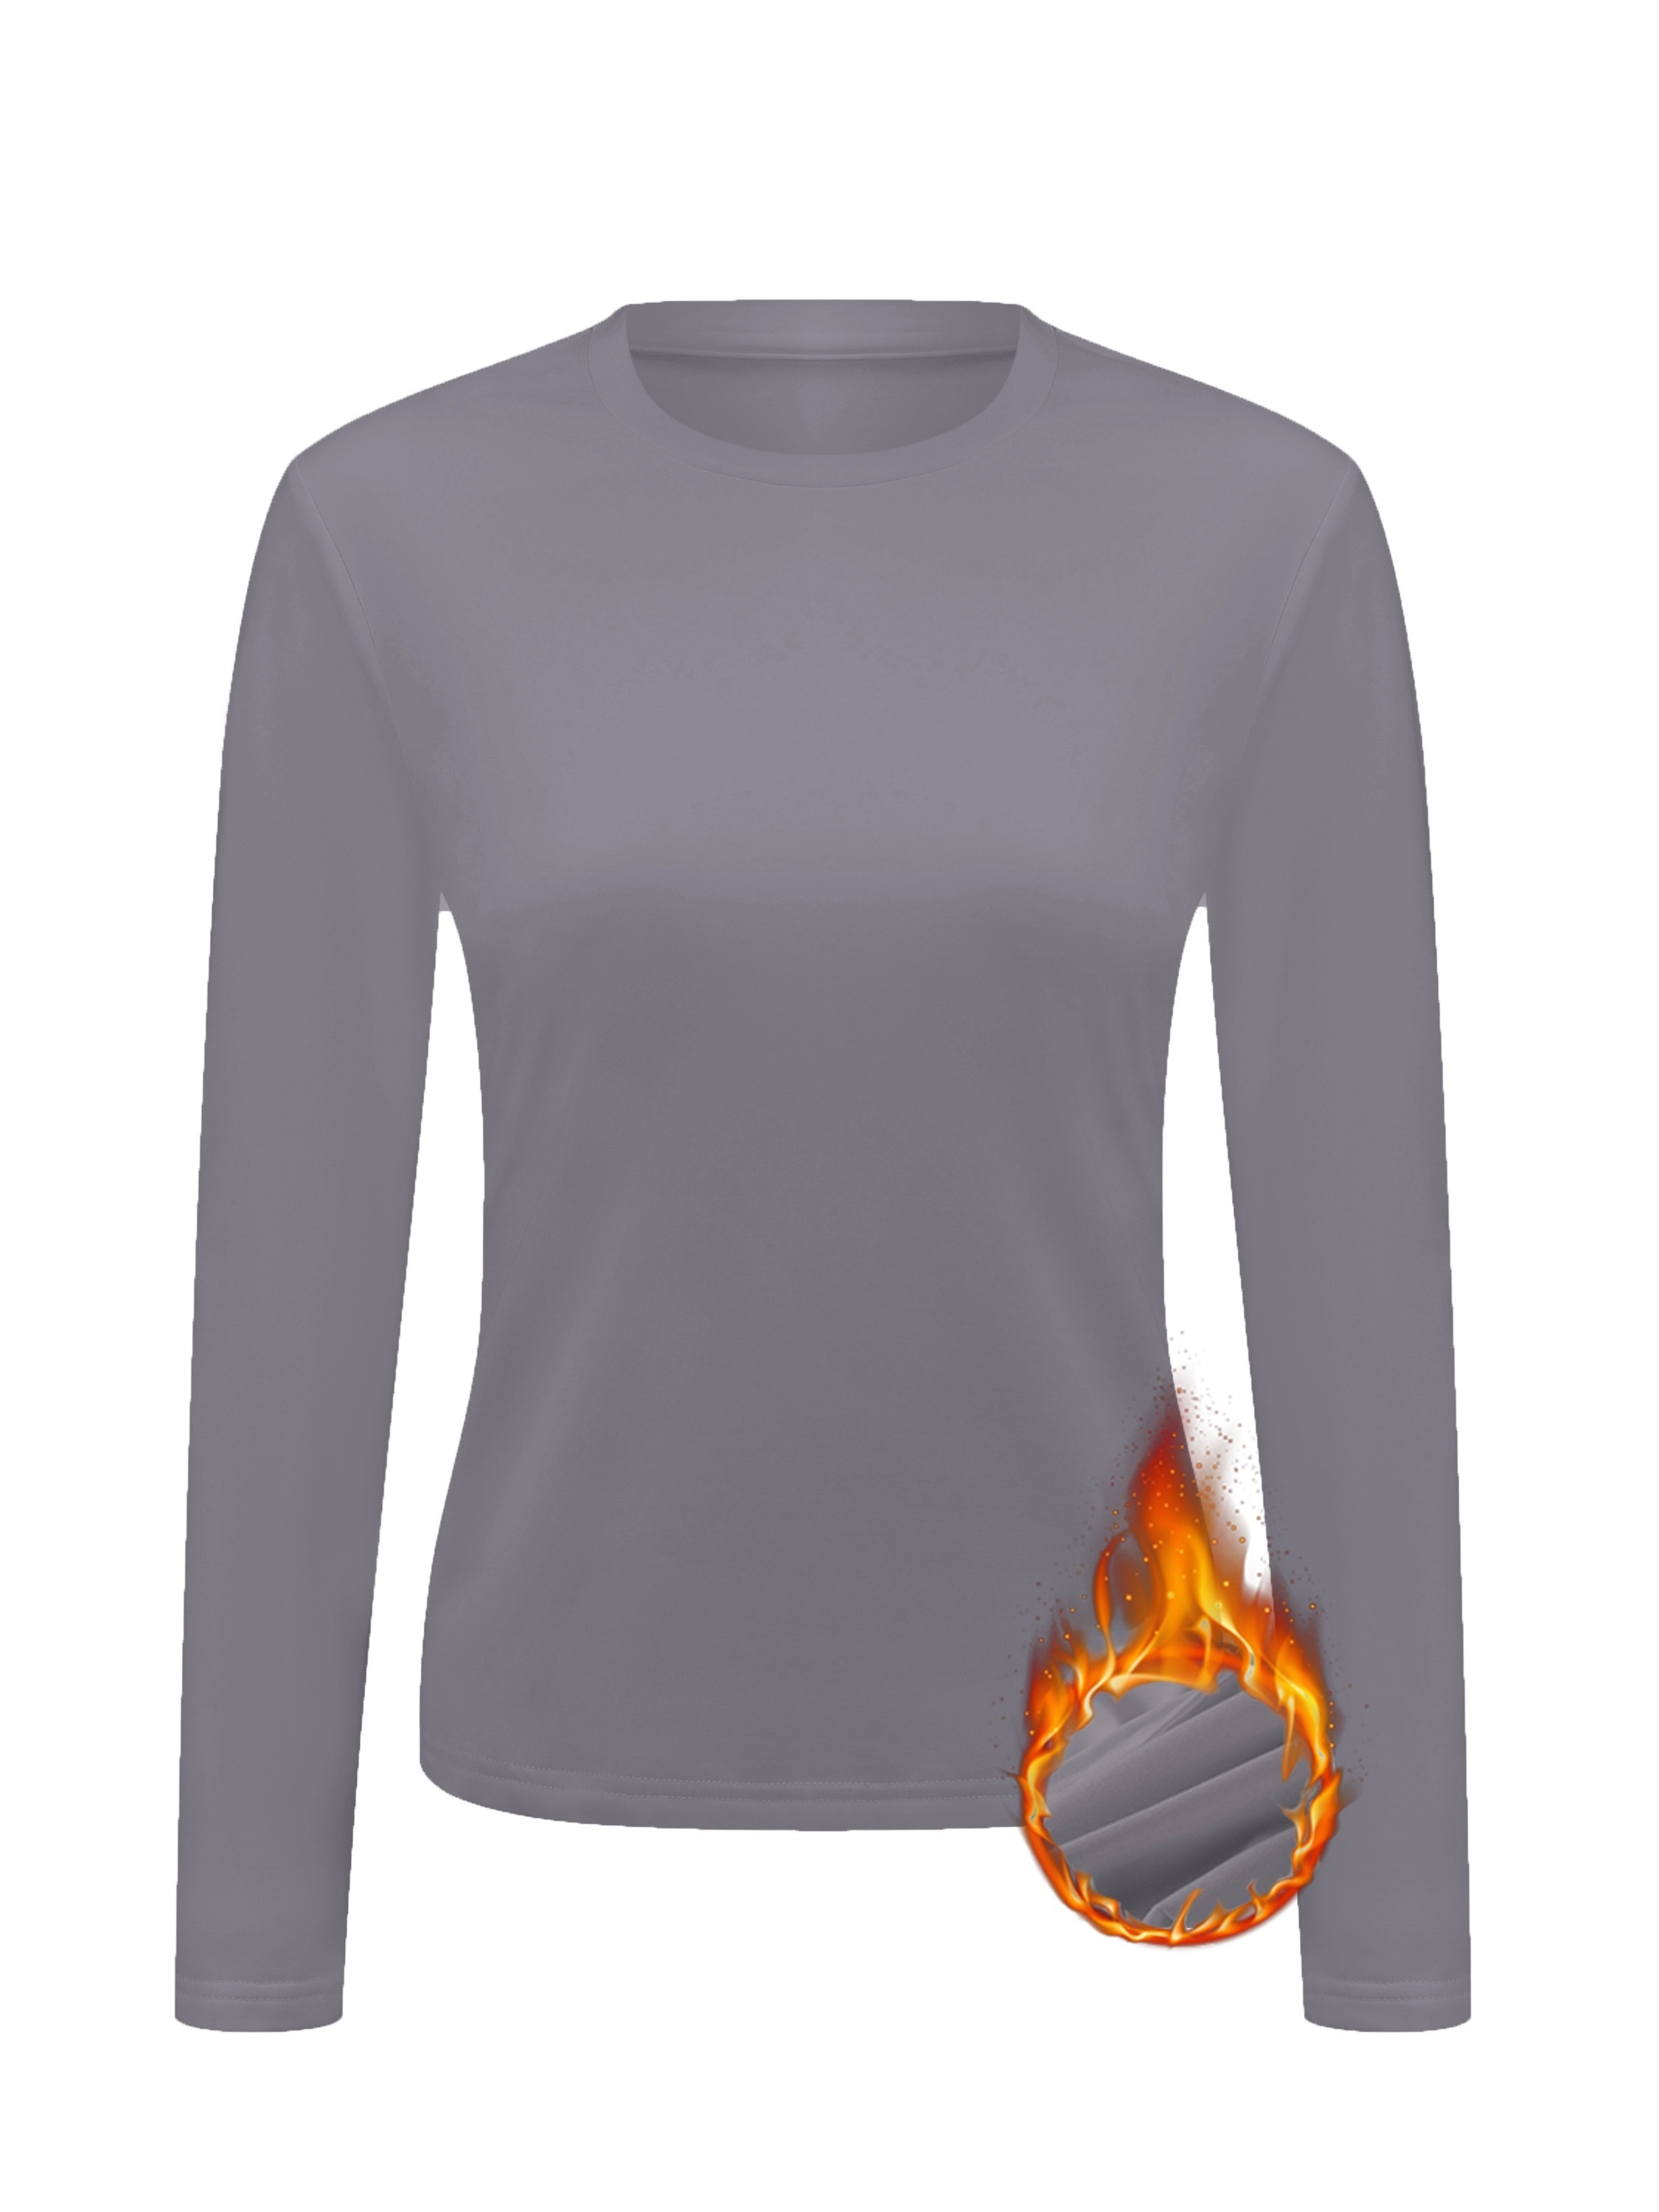 Women’s Long Sleeve Thermal Shirt